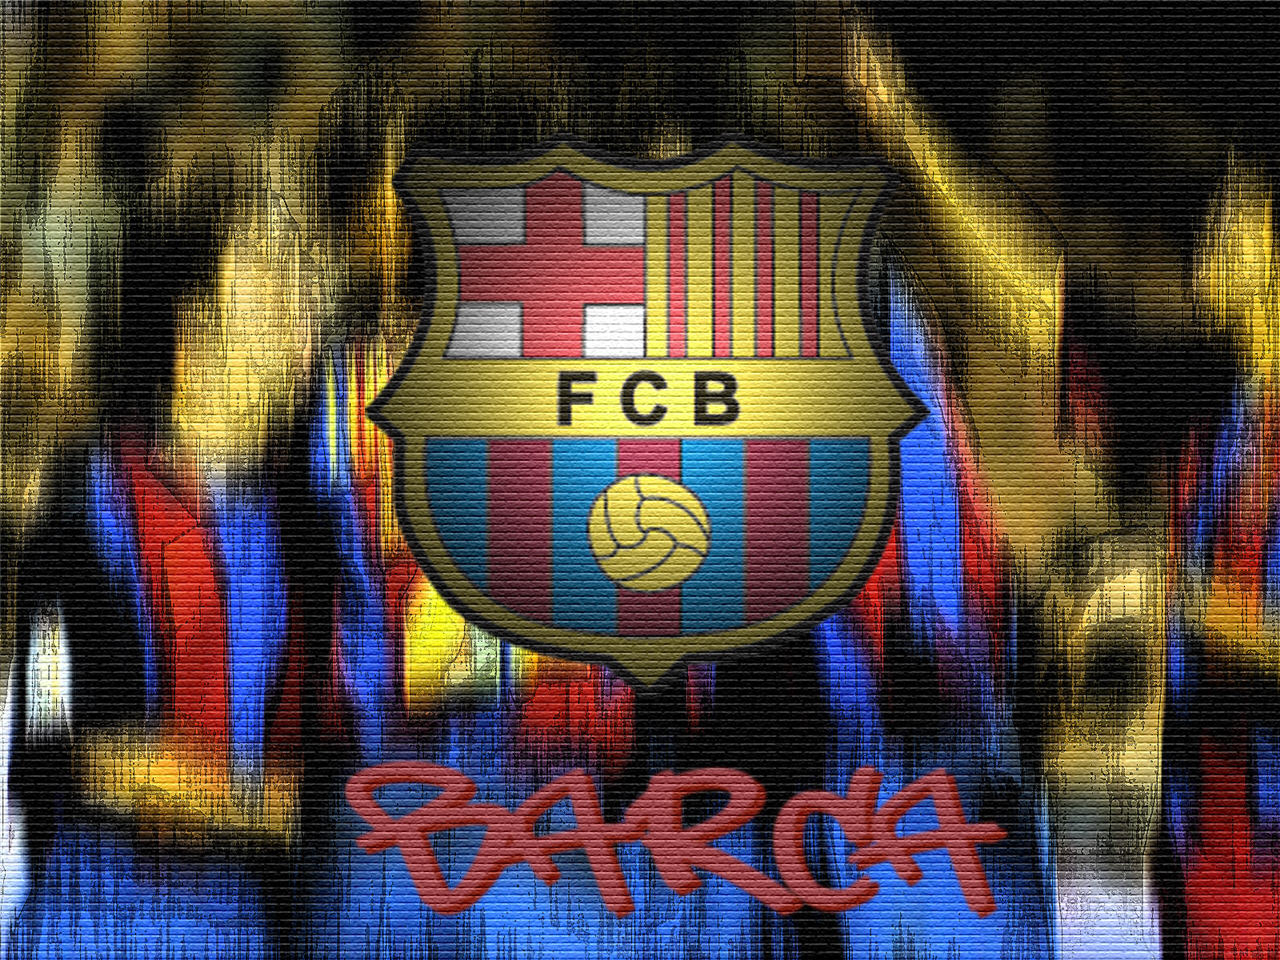 HD Wallpaper I Car - Barca - Football‎ - Real Madrid‎‎ - Animal